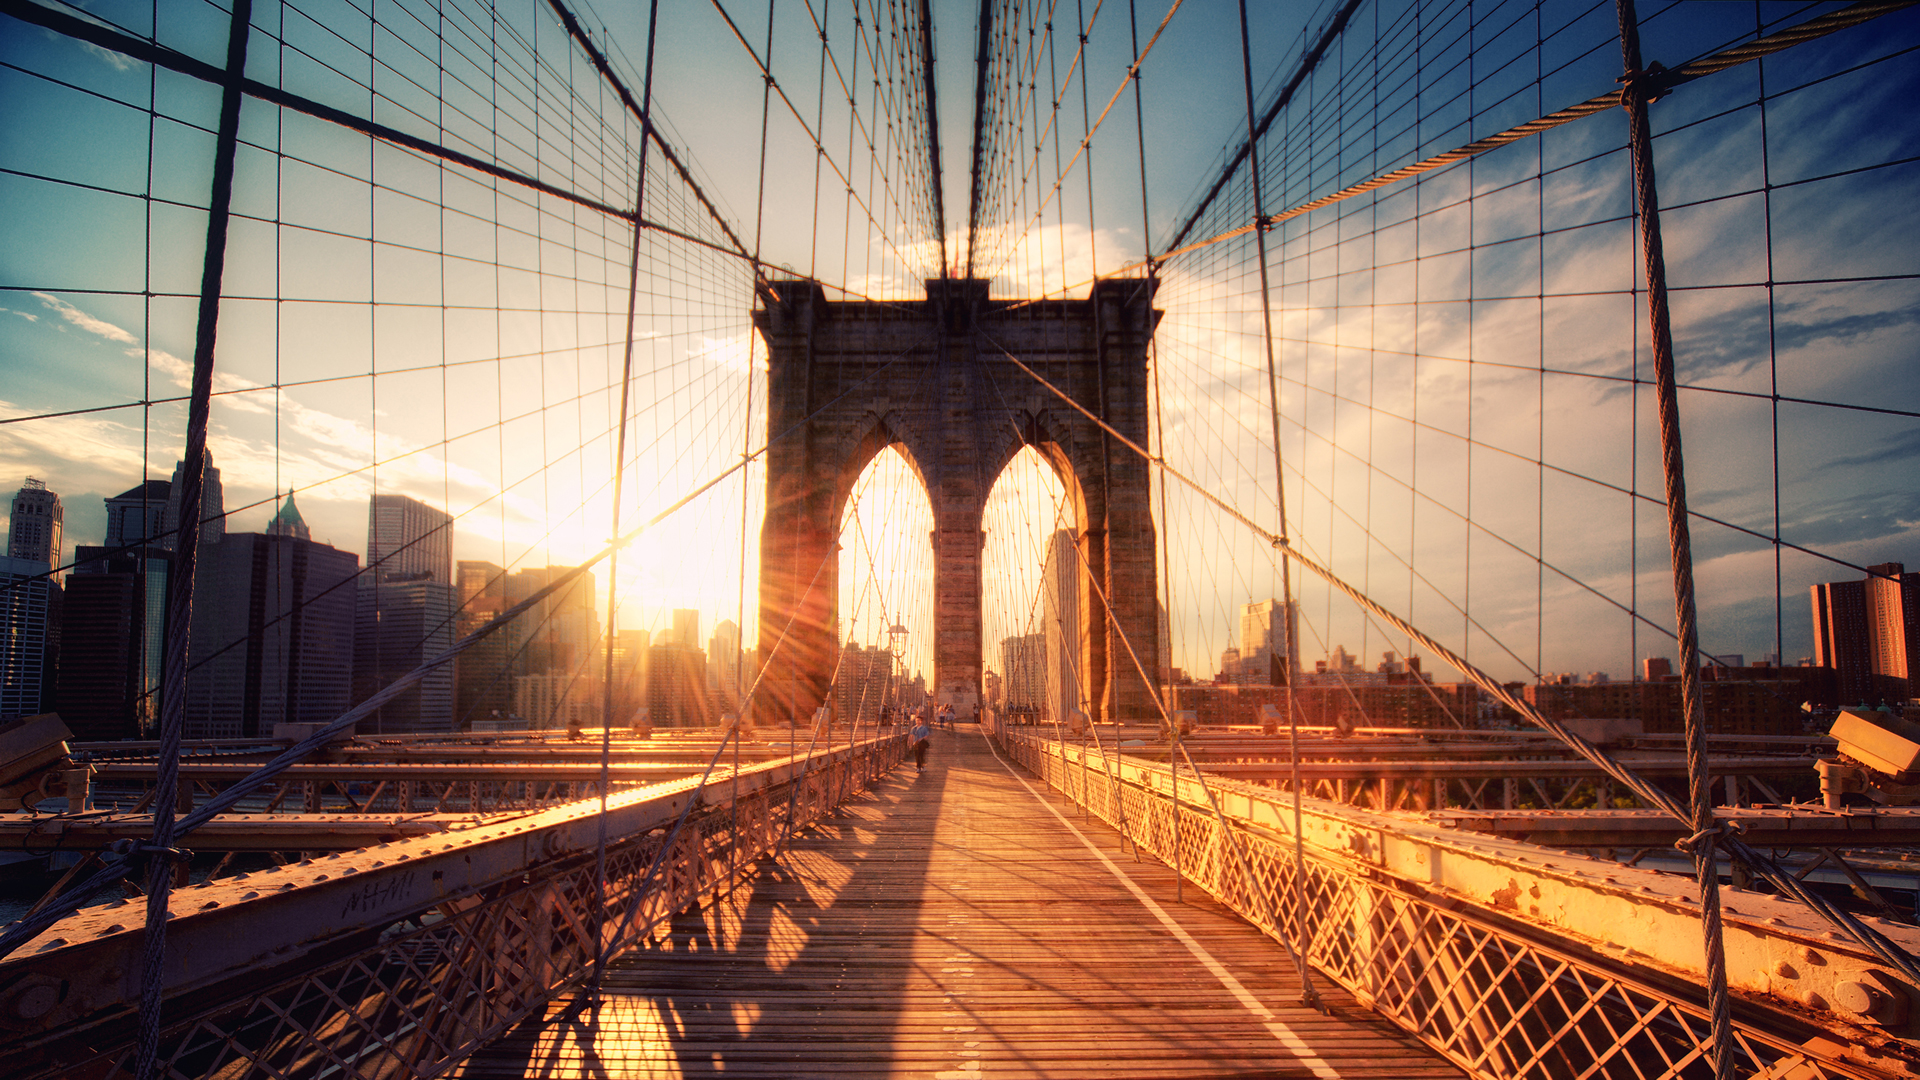 Watch: The Brooklyn Bridge – The Wisdom Daily